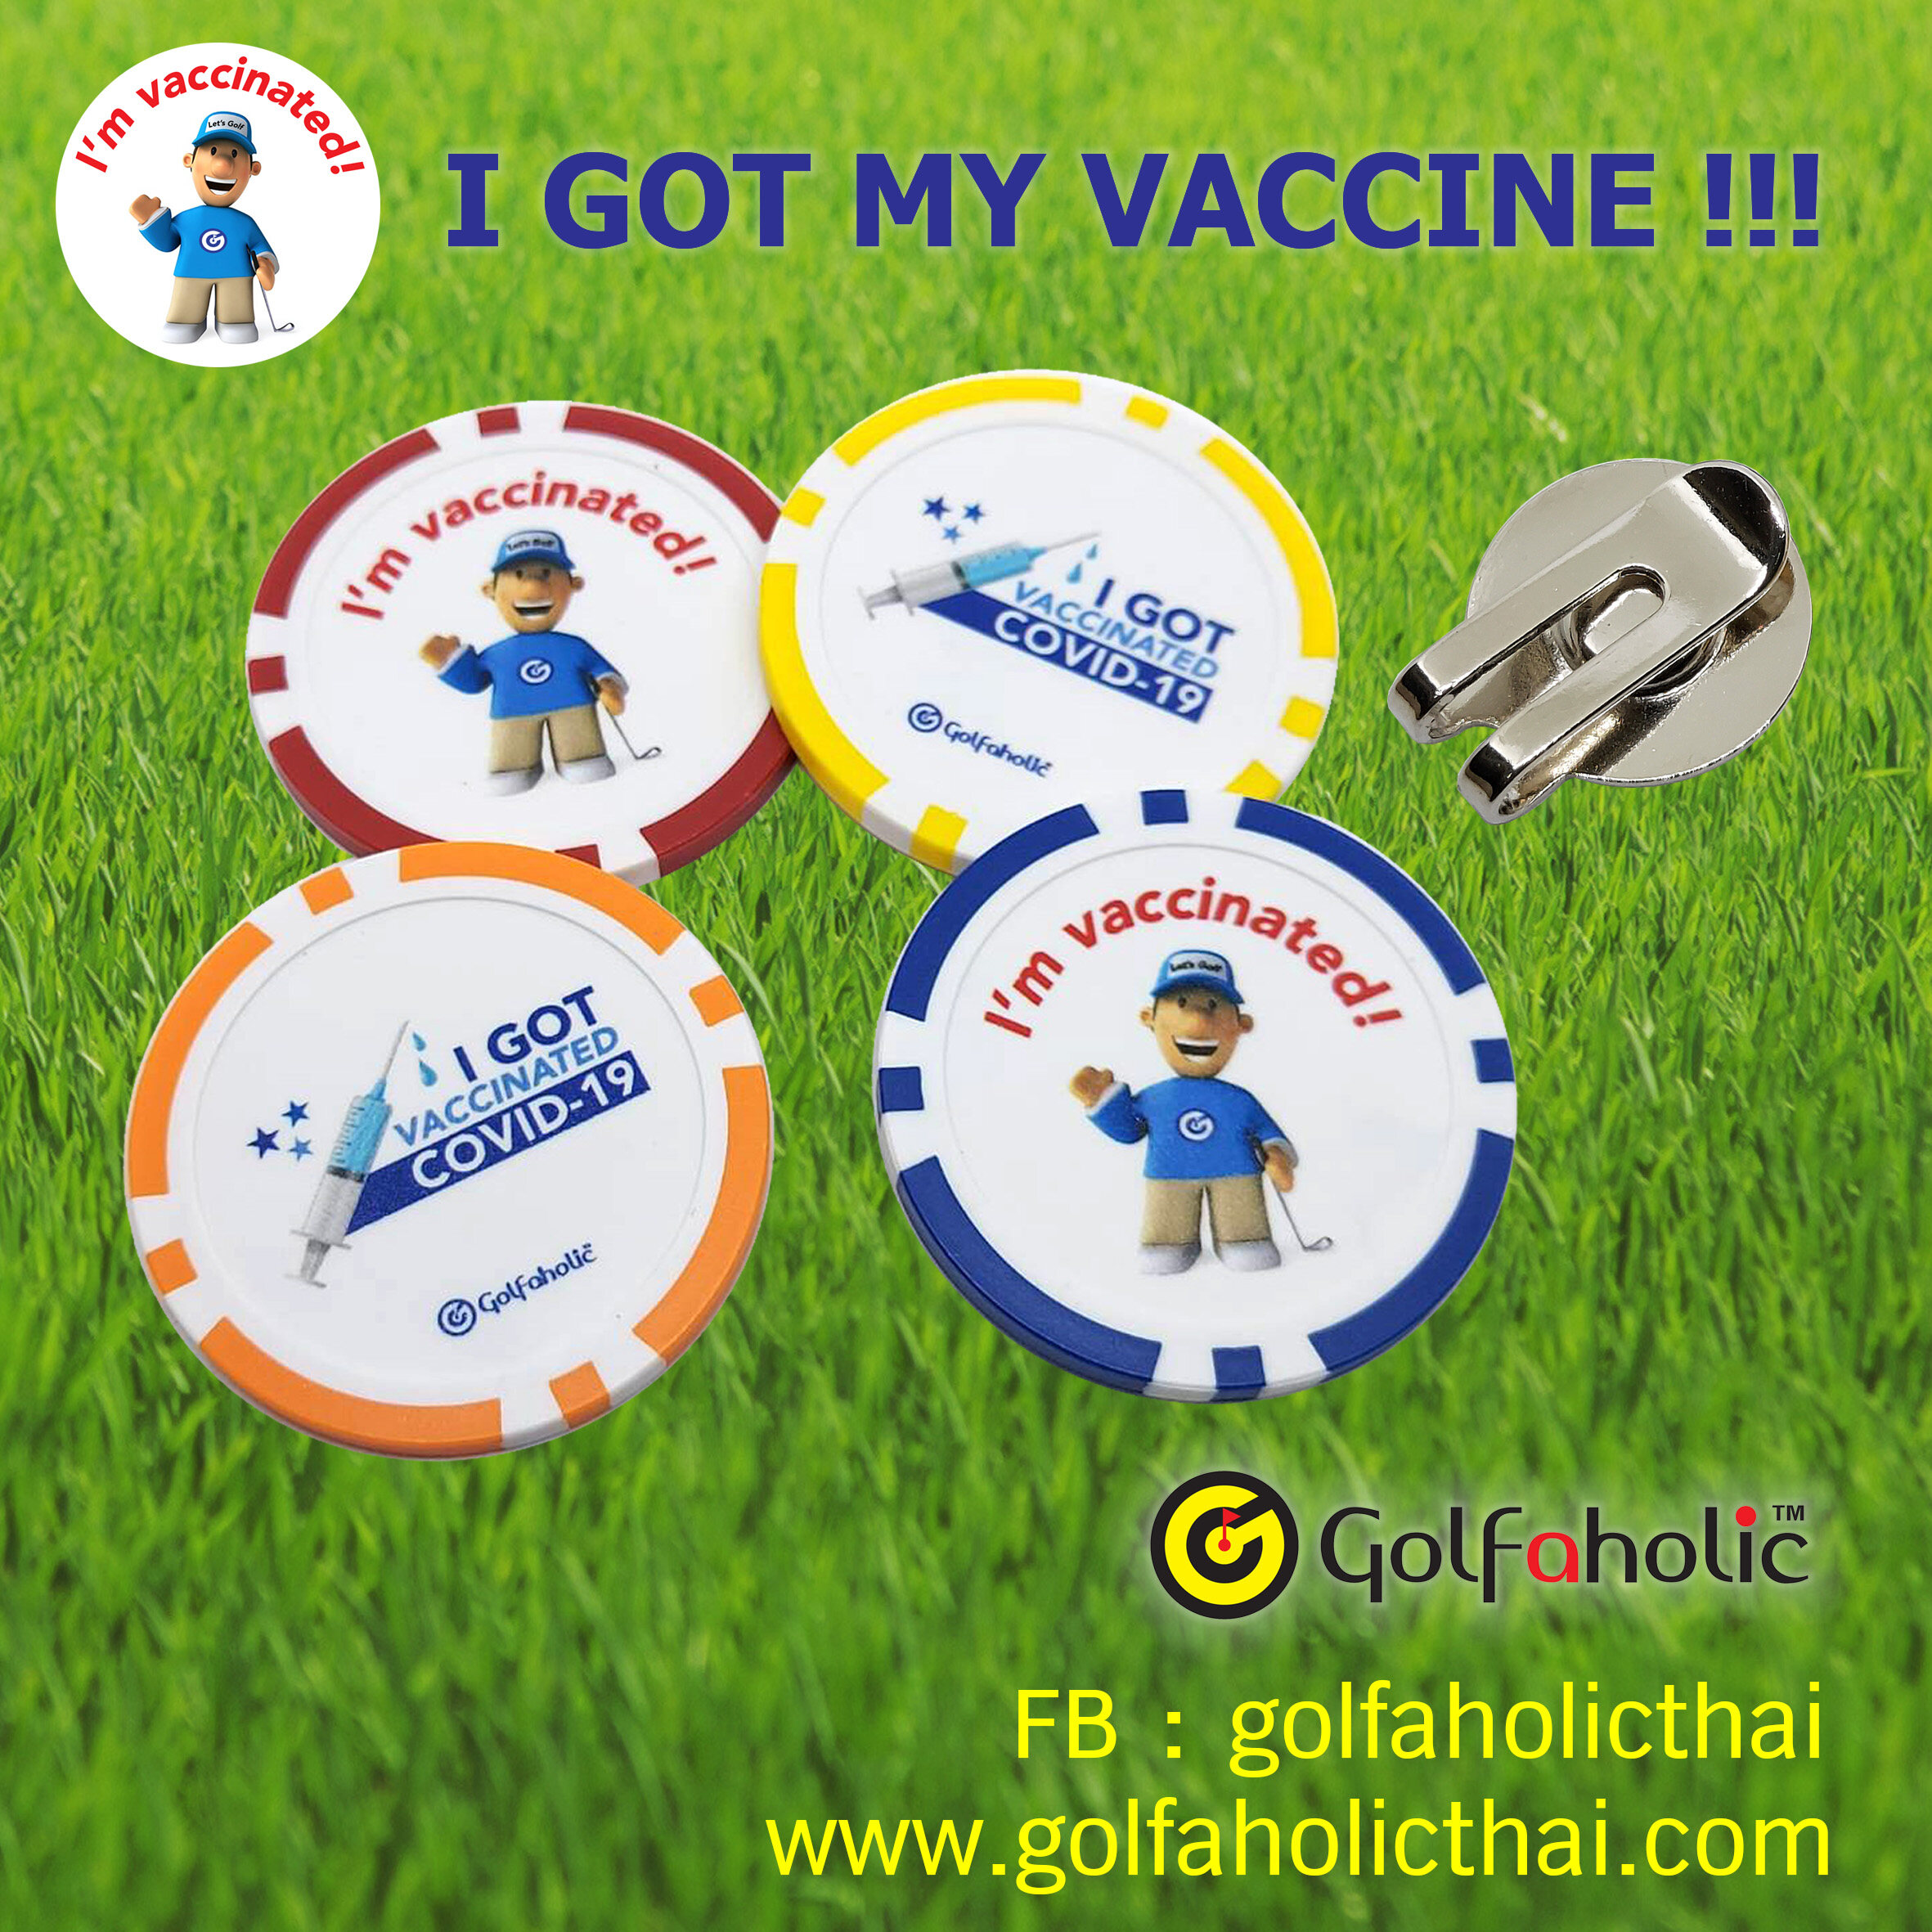 Golfaholic - I AM VACCINATED !! Casino Chip - กอล์ฟบอลมาร์คเกอร์ ฉันฉีดวัคซีนโควิด19 แล้ว คาสิโนชิพ